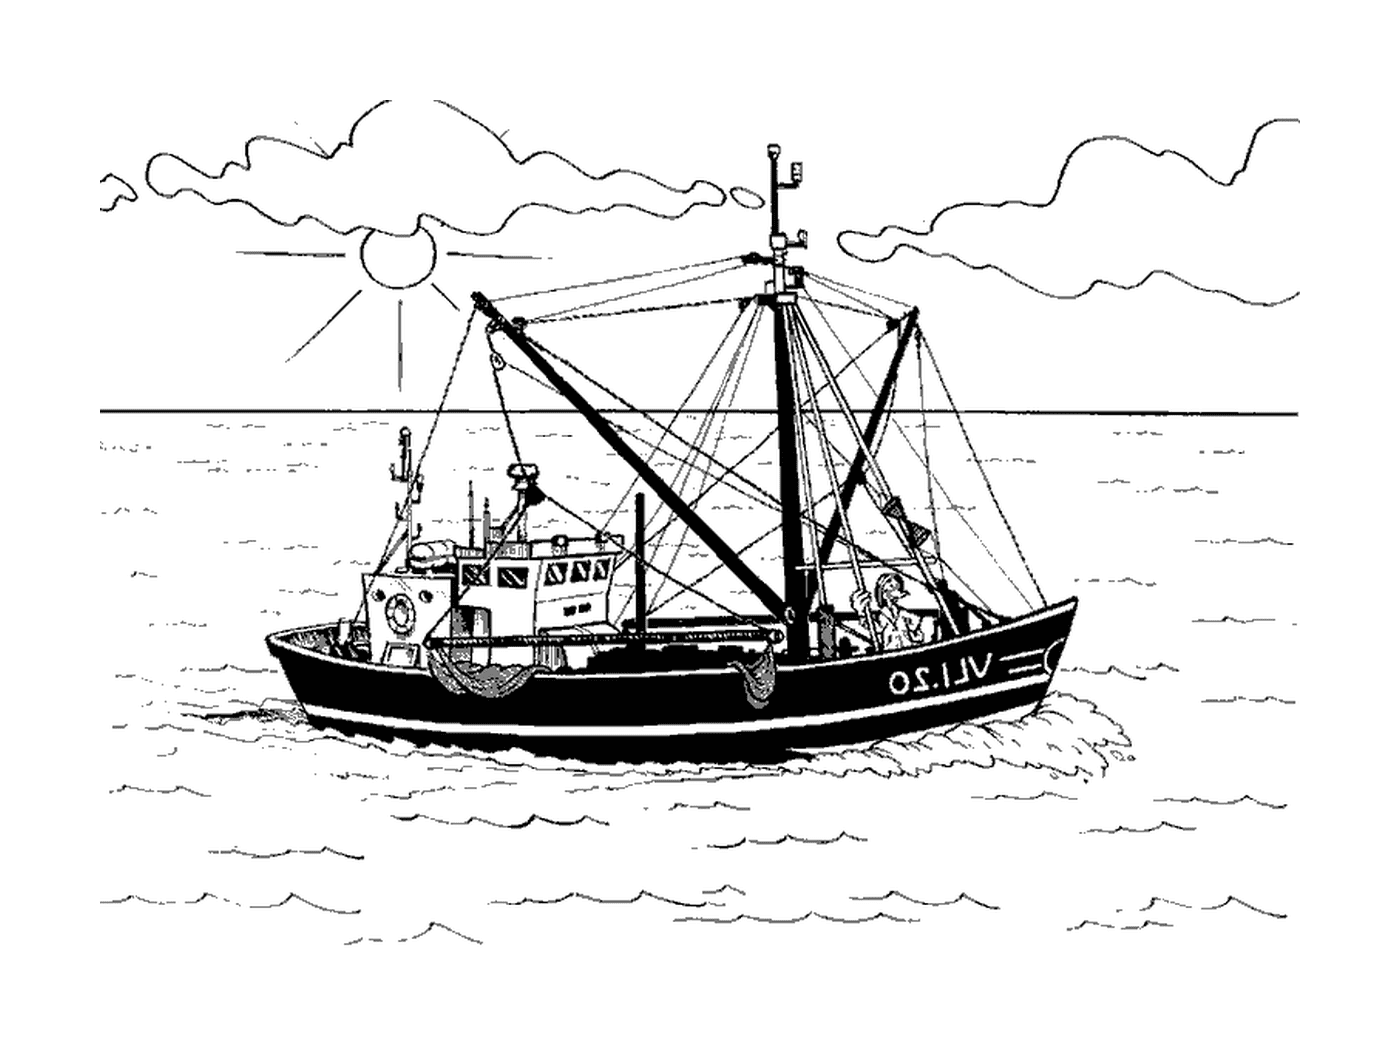  A trawler, fishing boat 